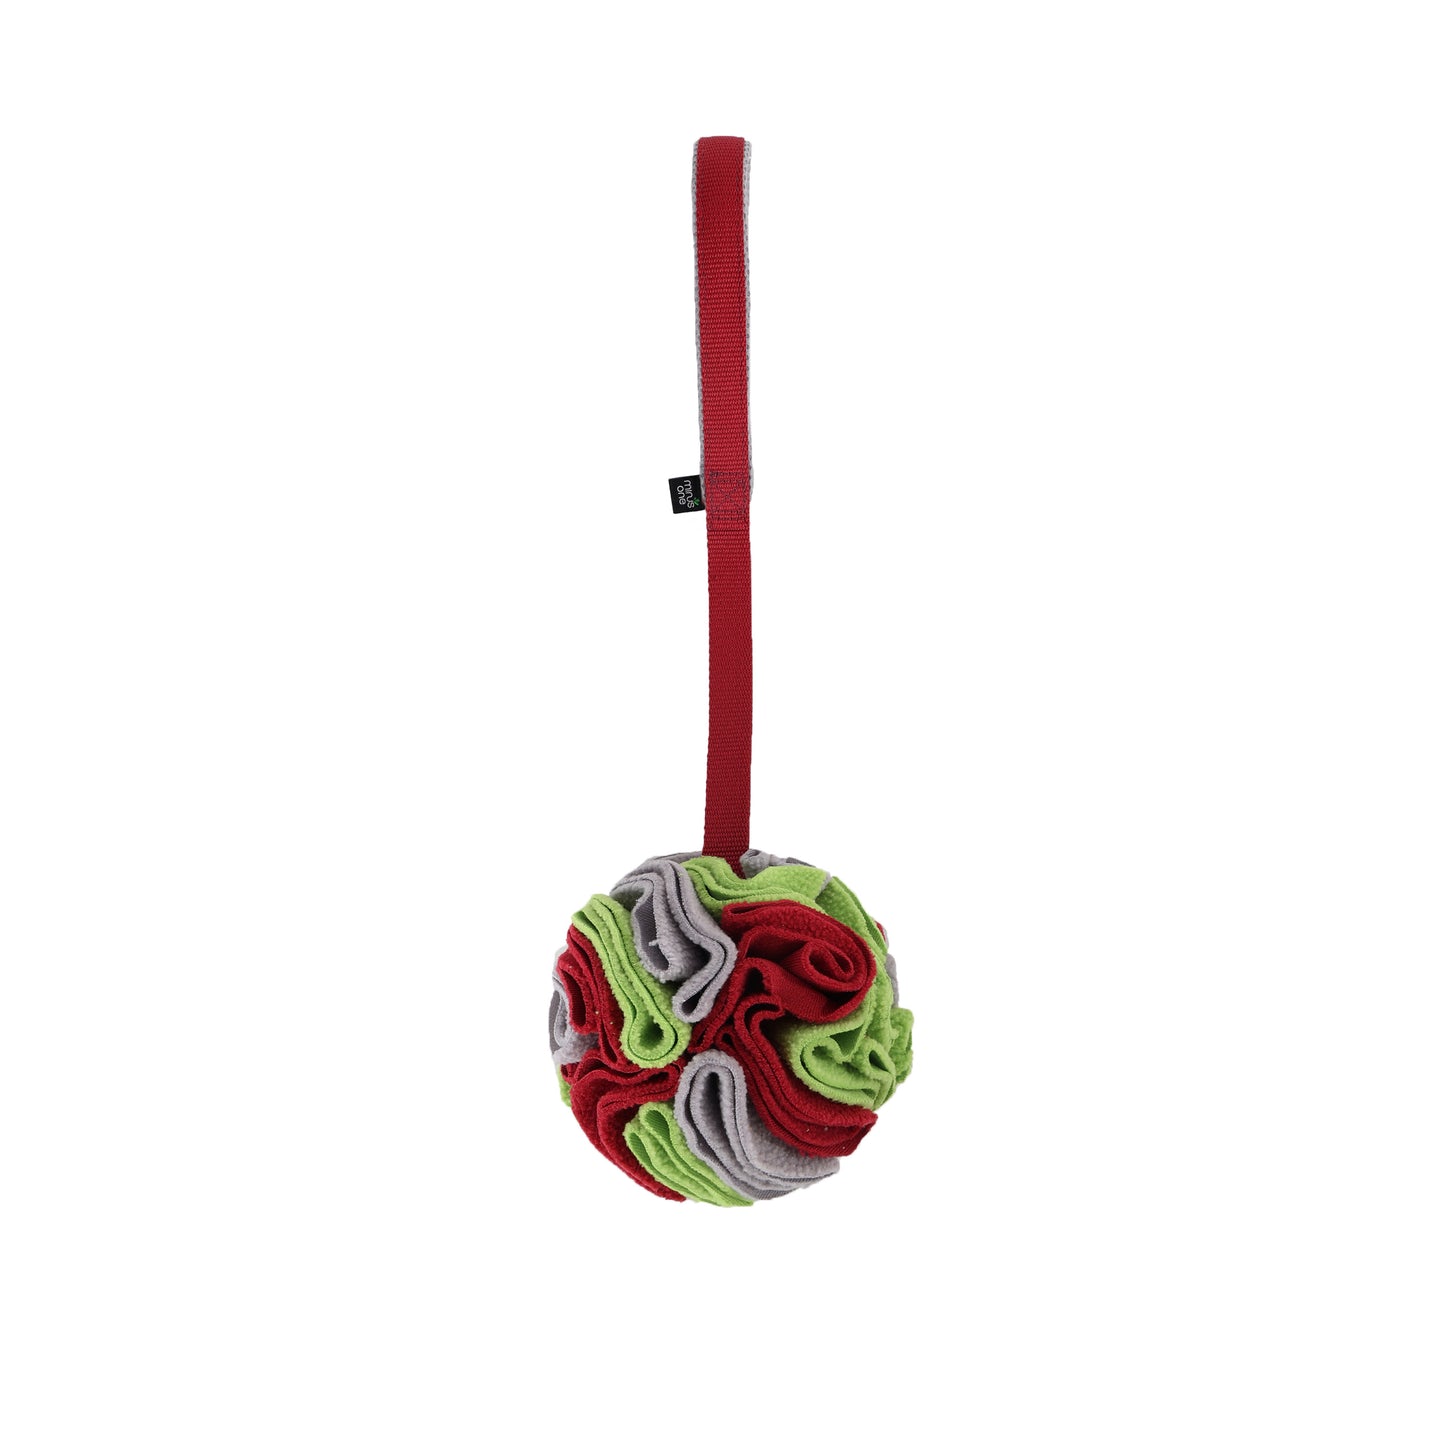 Fleece Dog Tug toy - Fleece Tug Ball